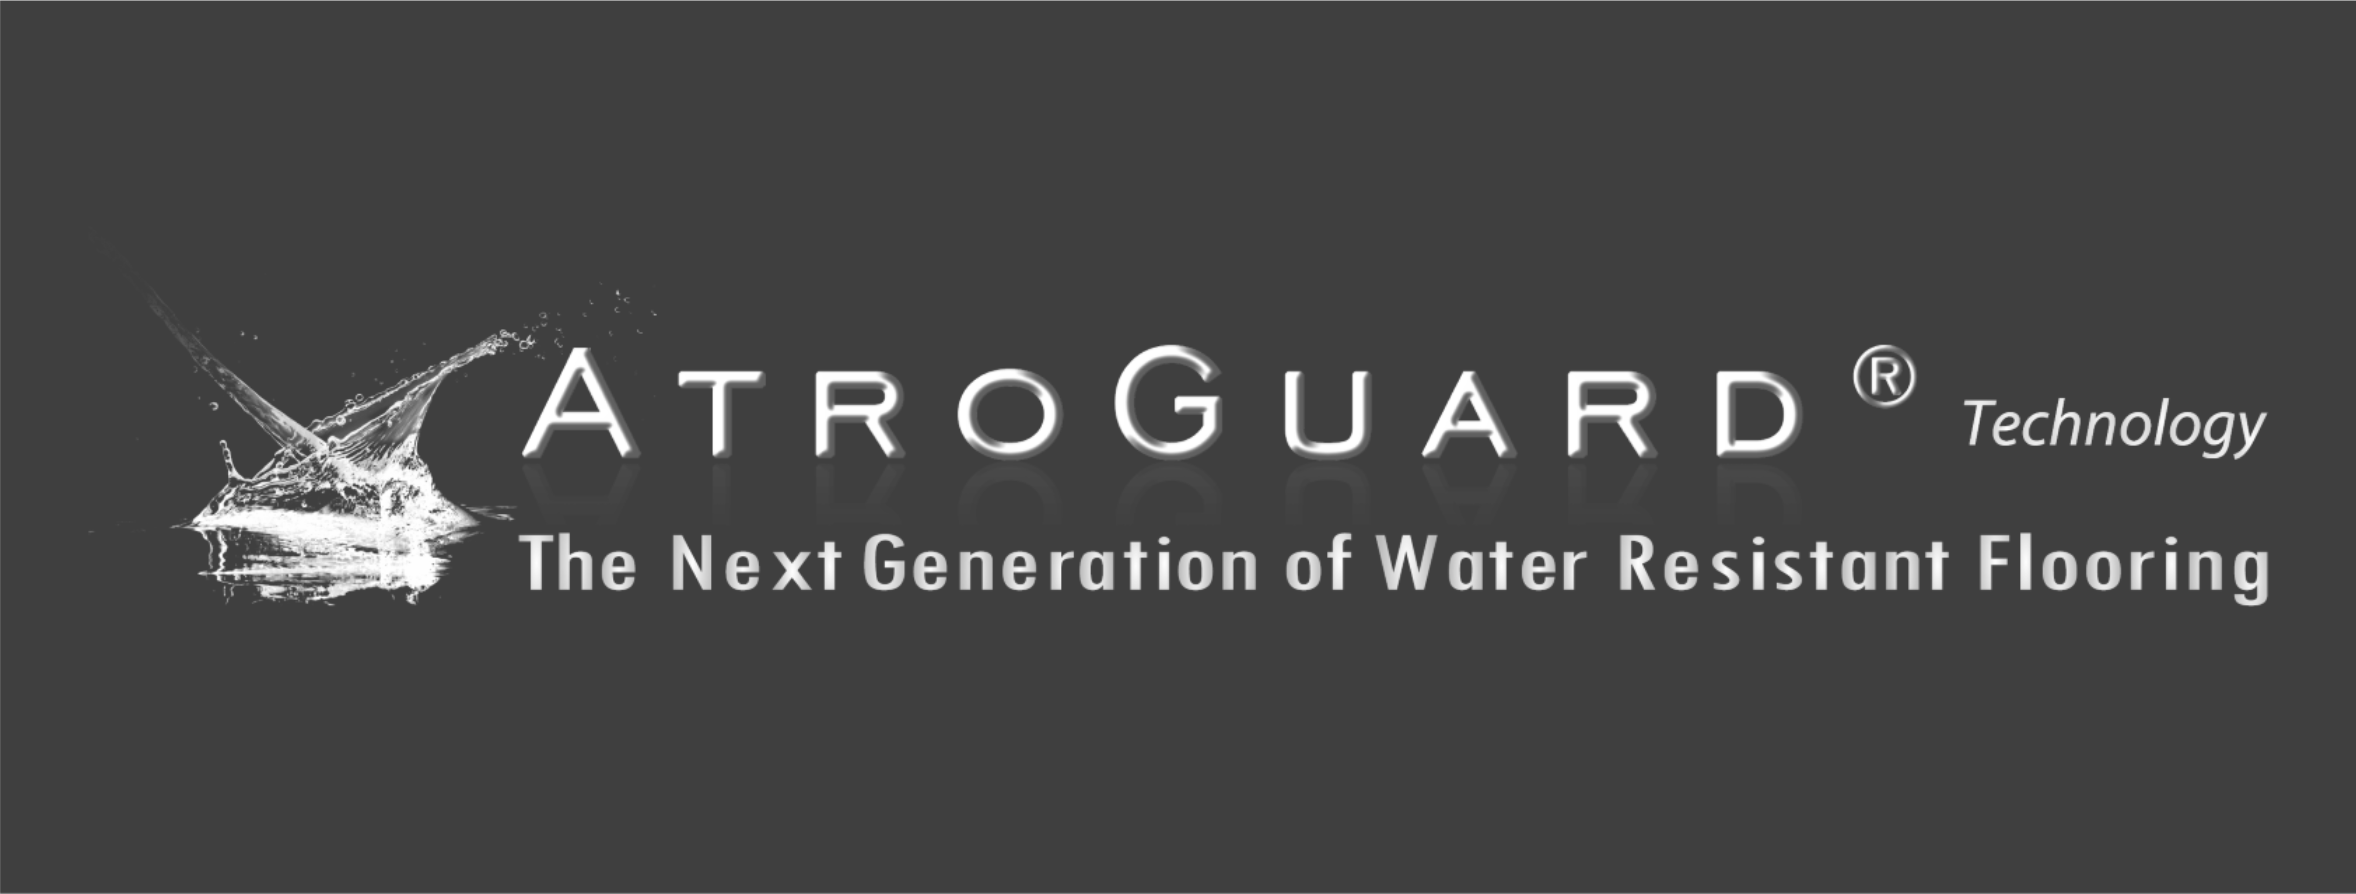 Atroguard logo gray scale.png